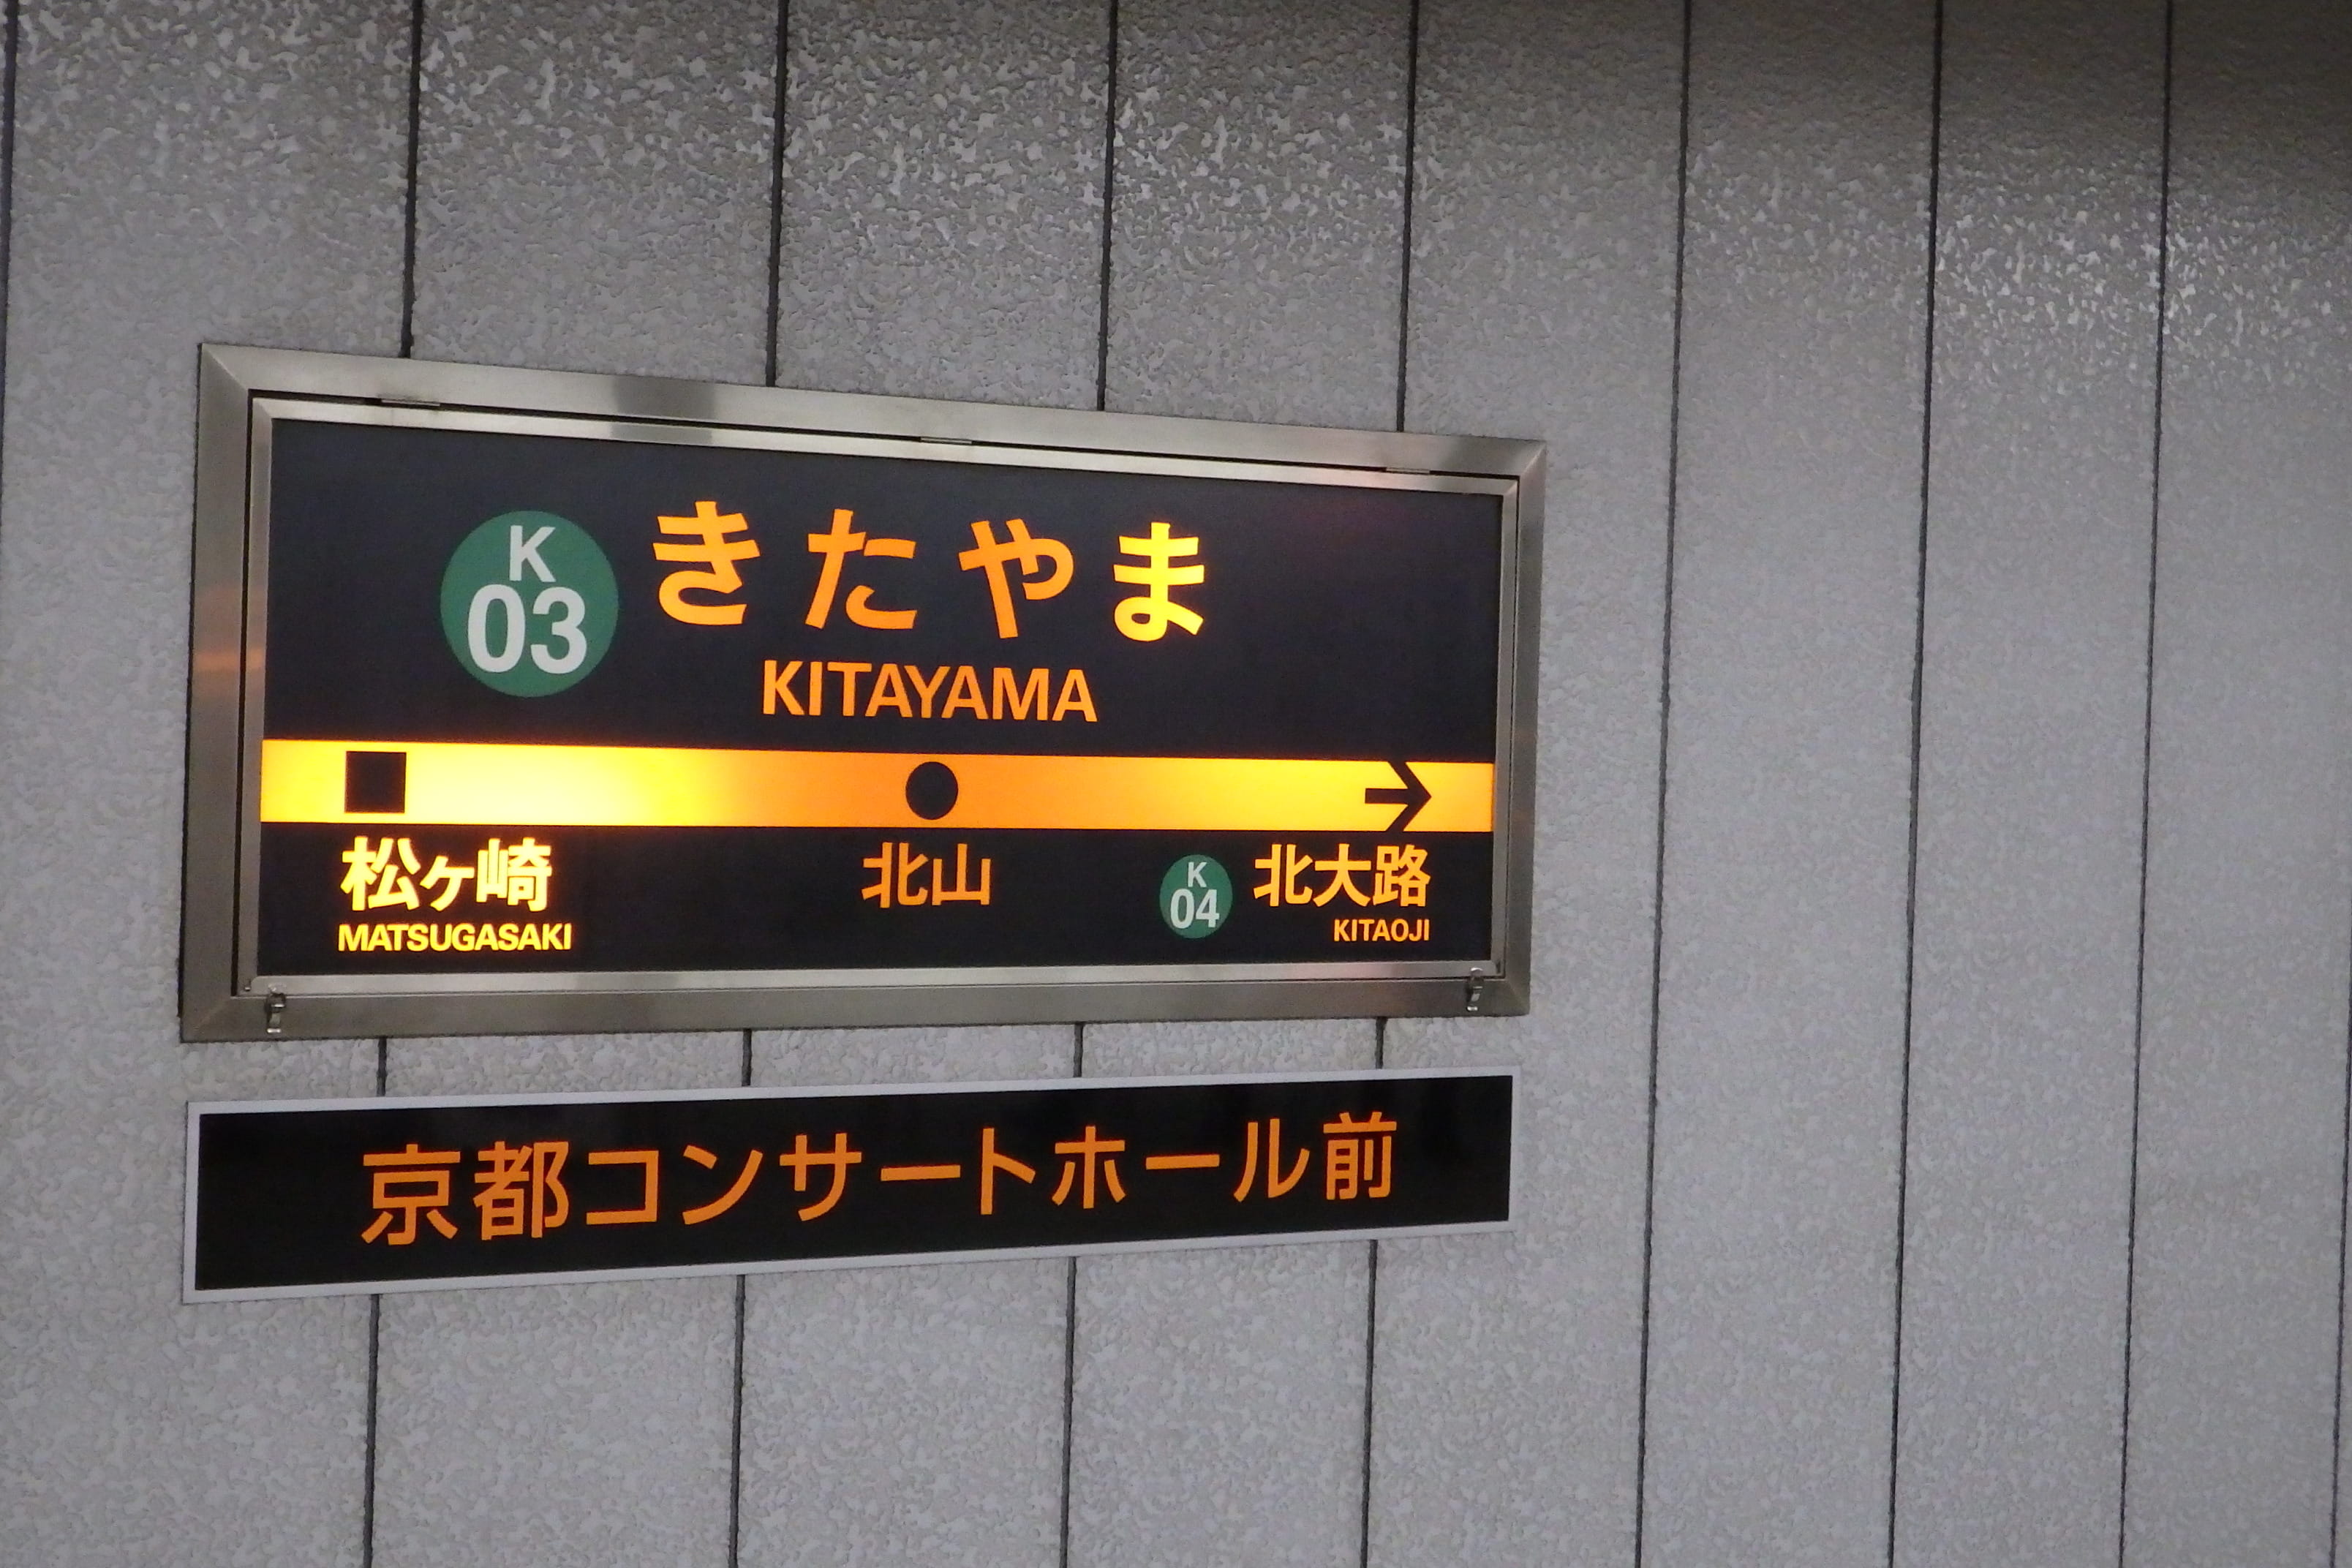 japan, kyoto, kitayama station, japanese, nihon, nihongo, train